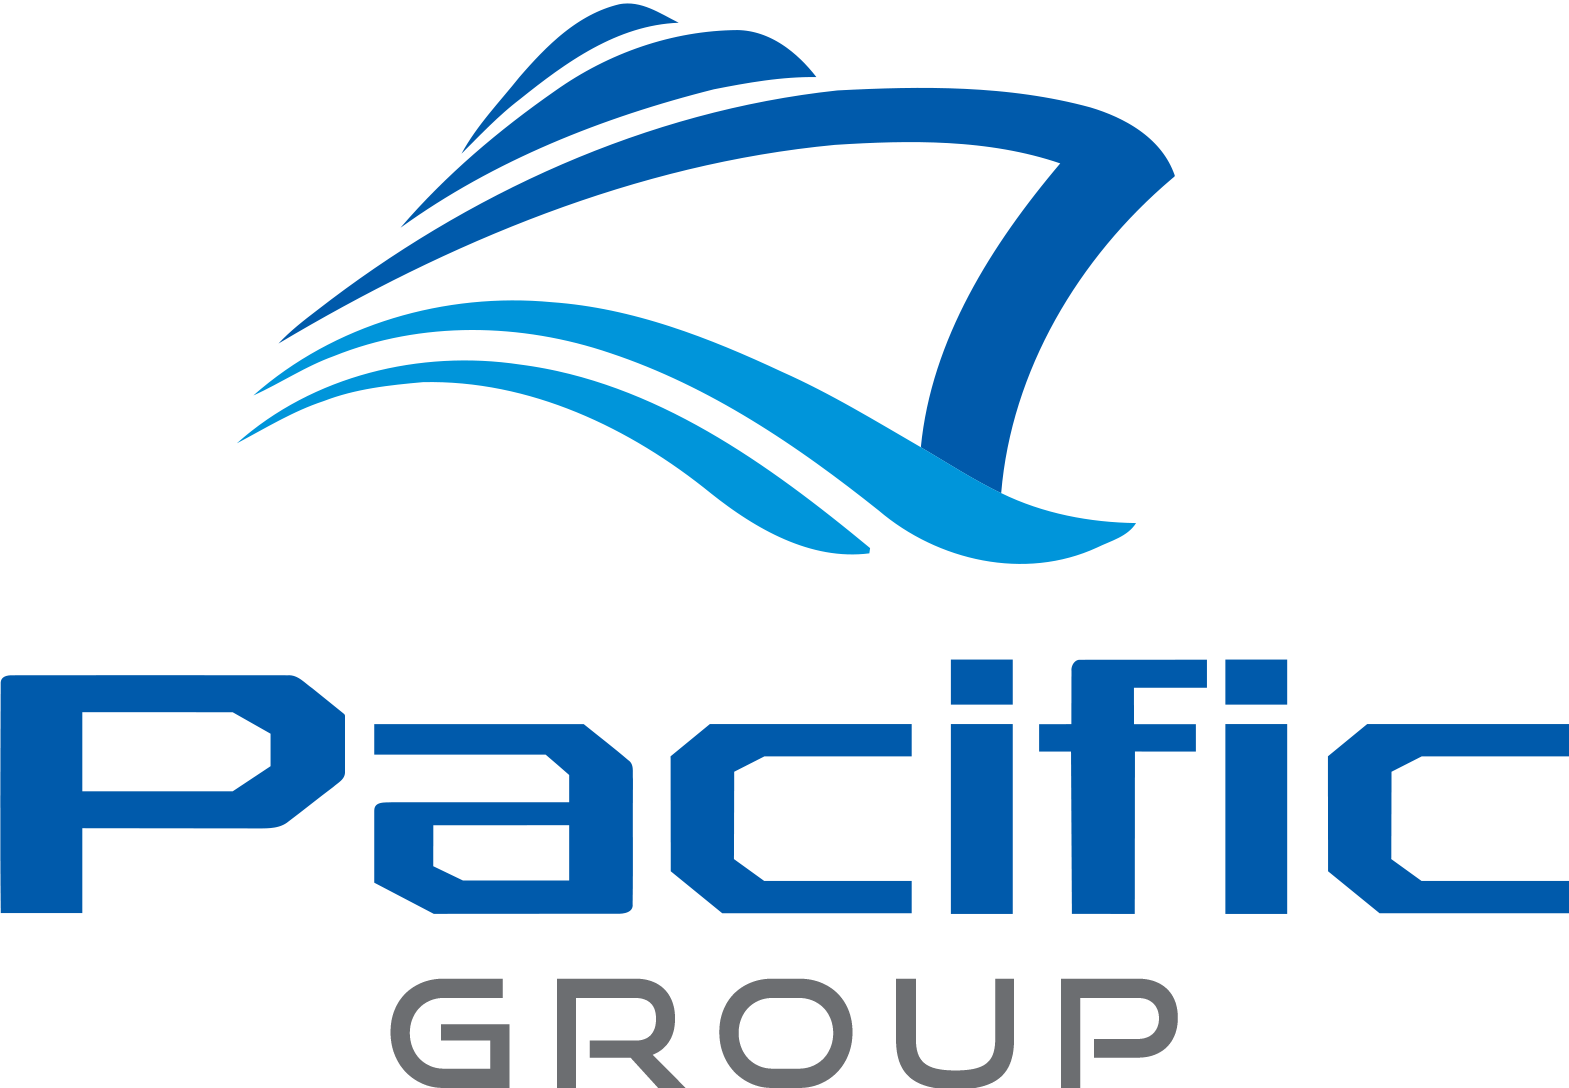 Pacific logistics group